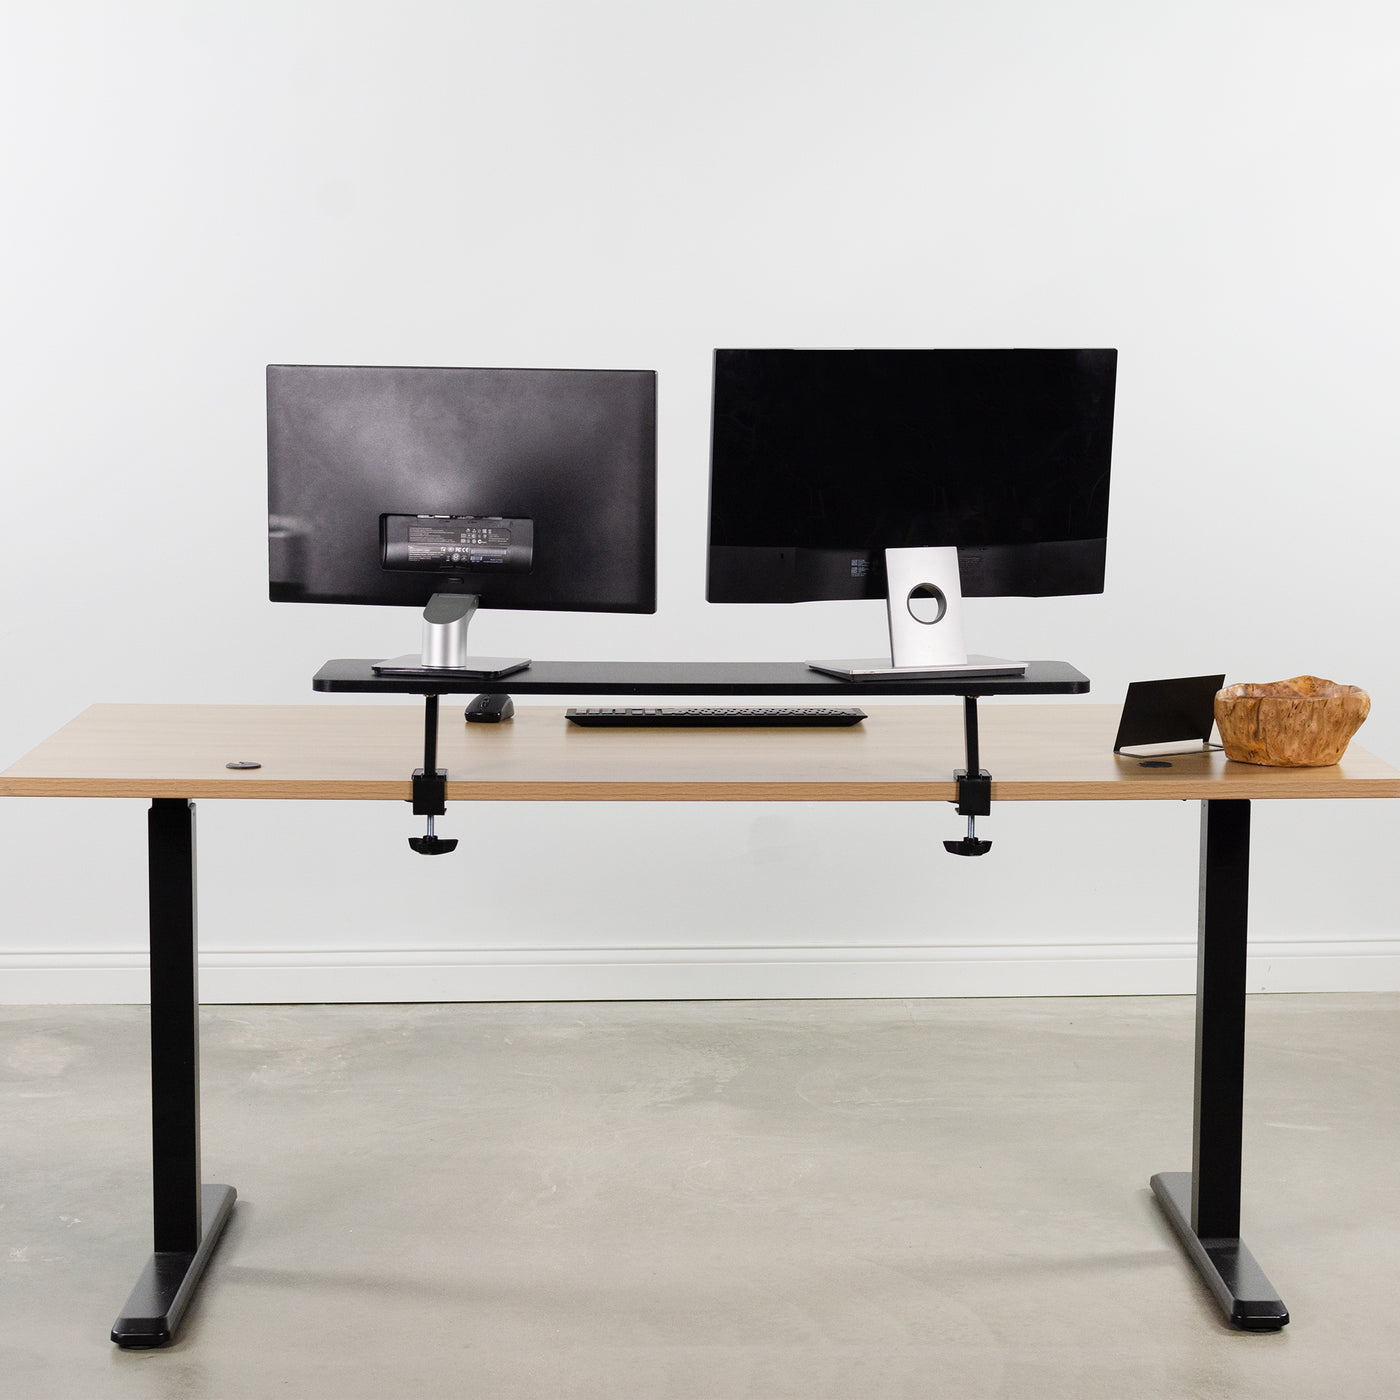  VIVO Large 42 inch Clamp-on Overhead Desk Shelf, Raised Desktop  Organizer, Elevated Workstation Accessory Platform, Black, DESK-SHELF42-OB  : Office Products